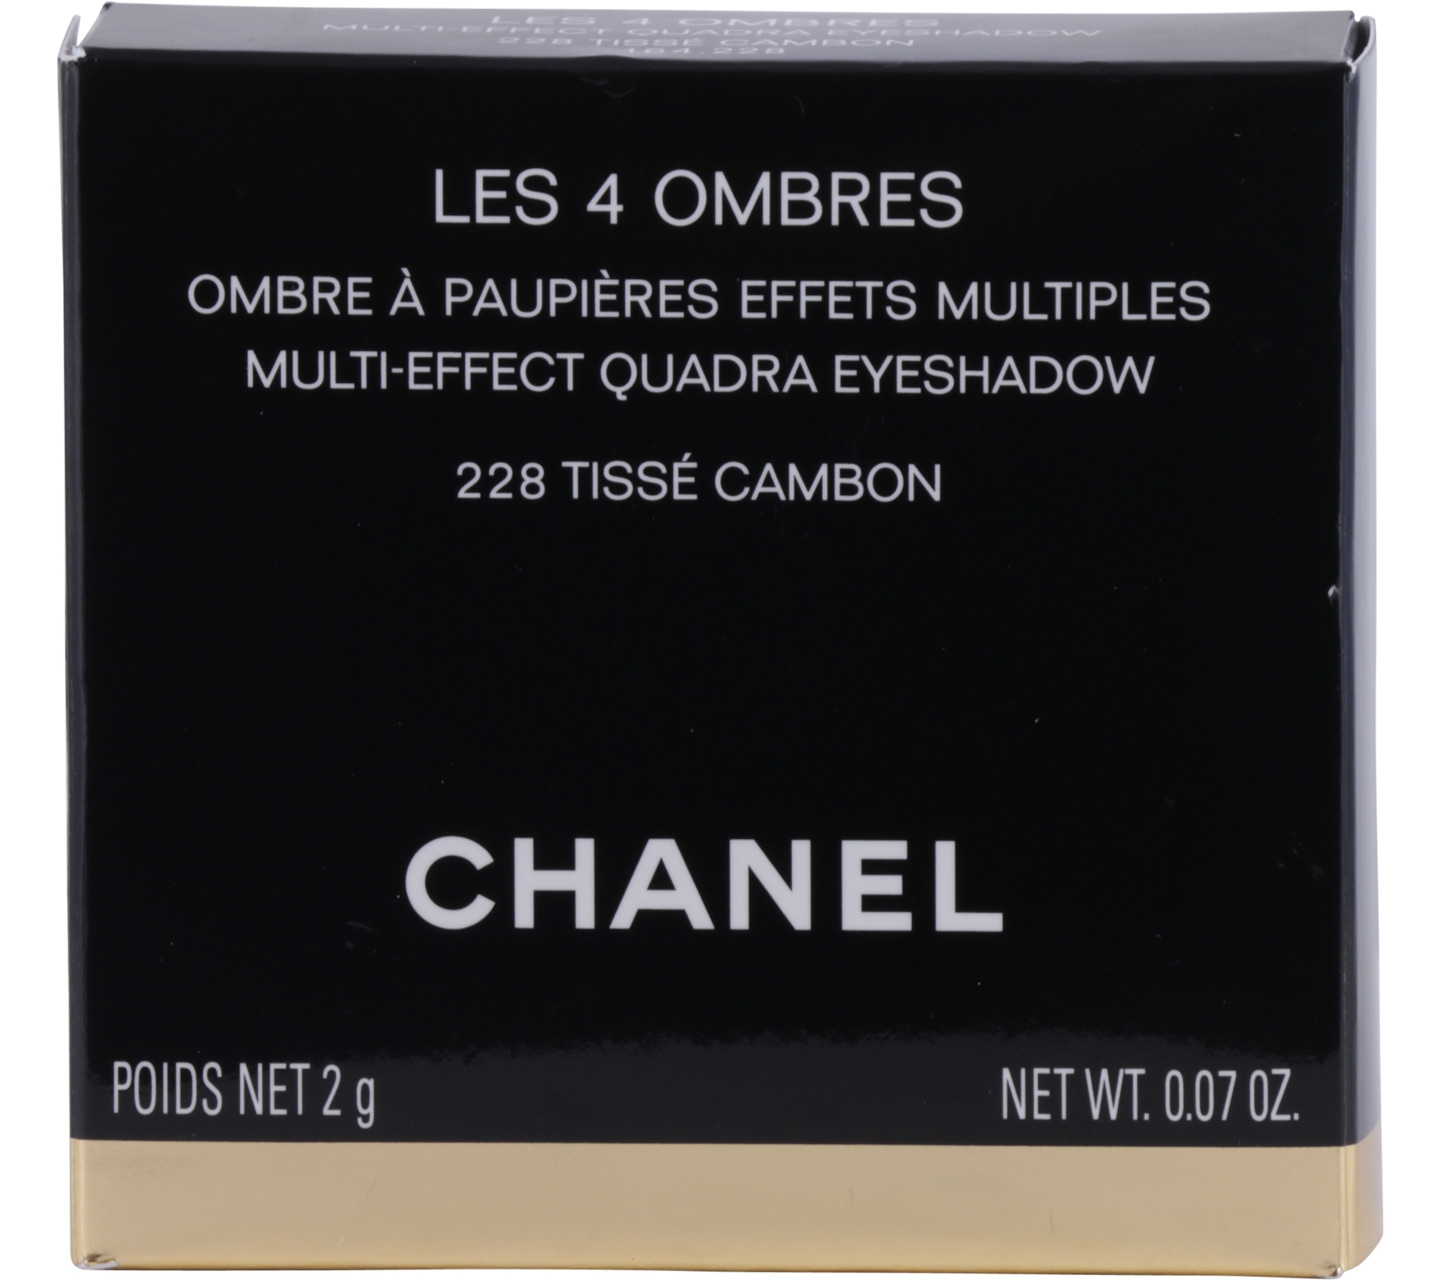 Chanel 228 Tisse Cambon Les 4 Ombres Multi-Effect Quadra Eyeshadow Eyes